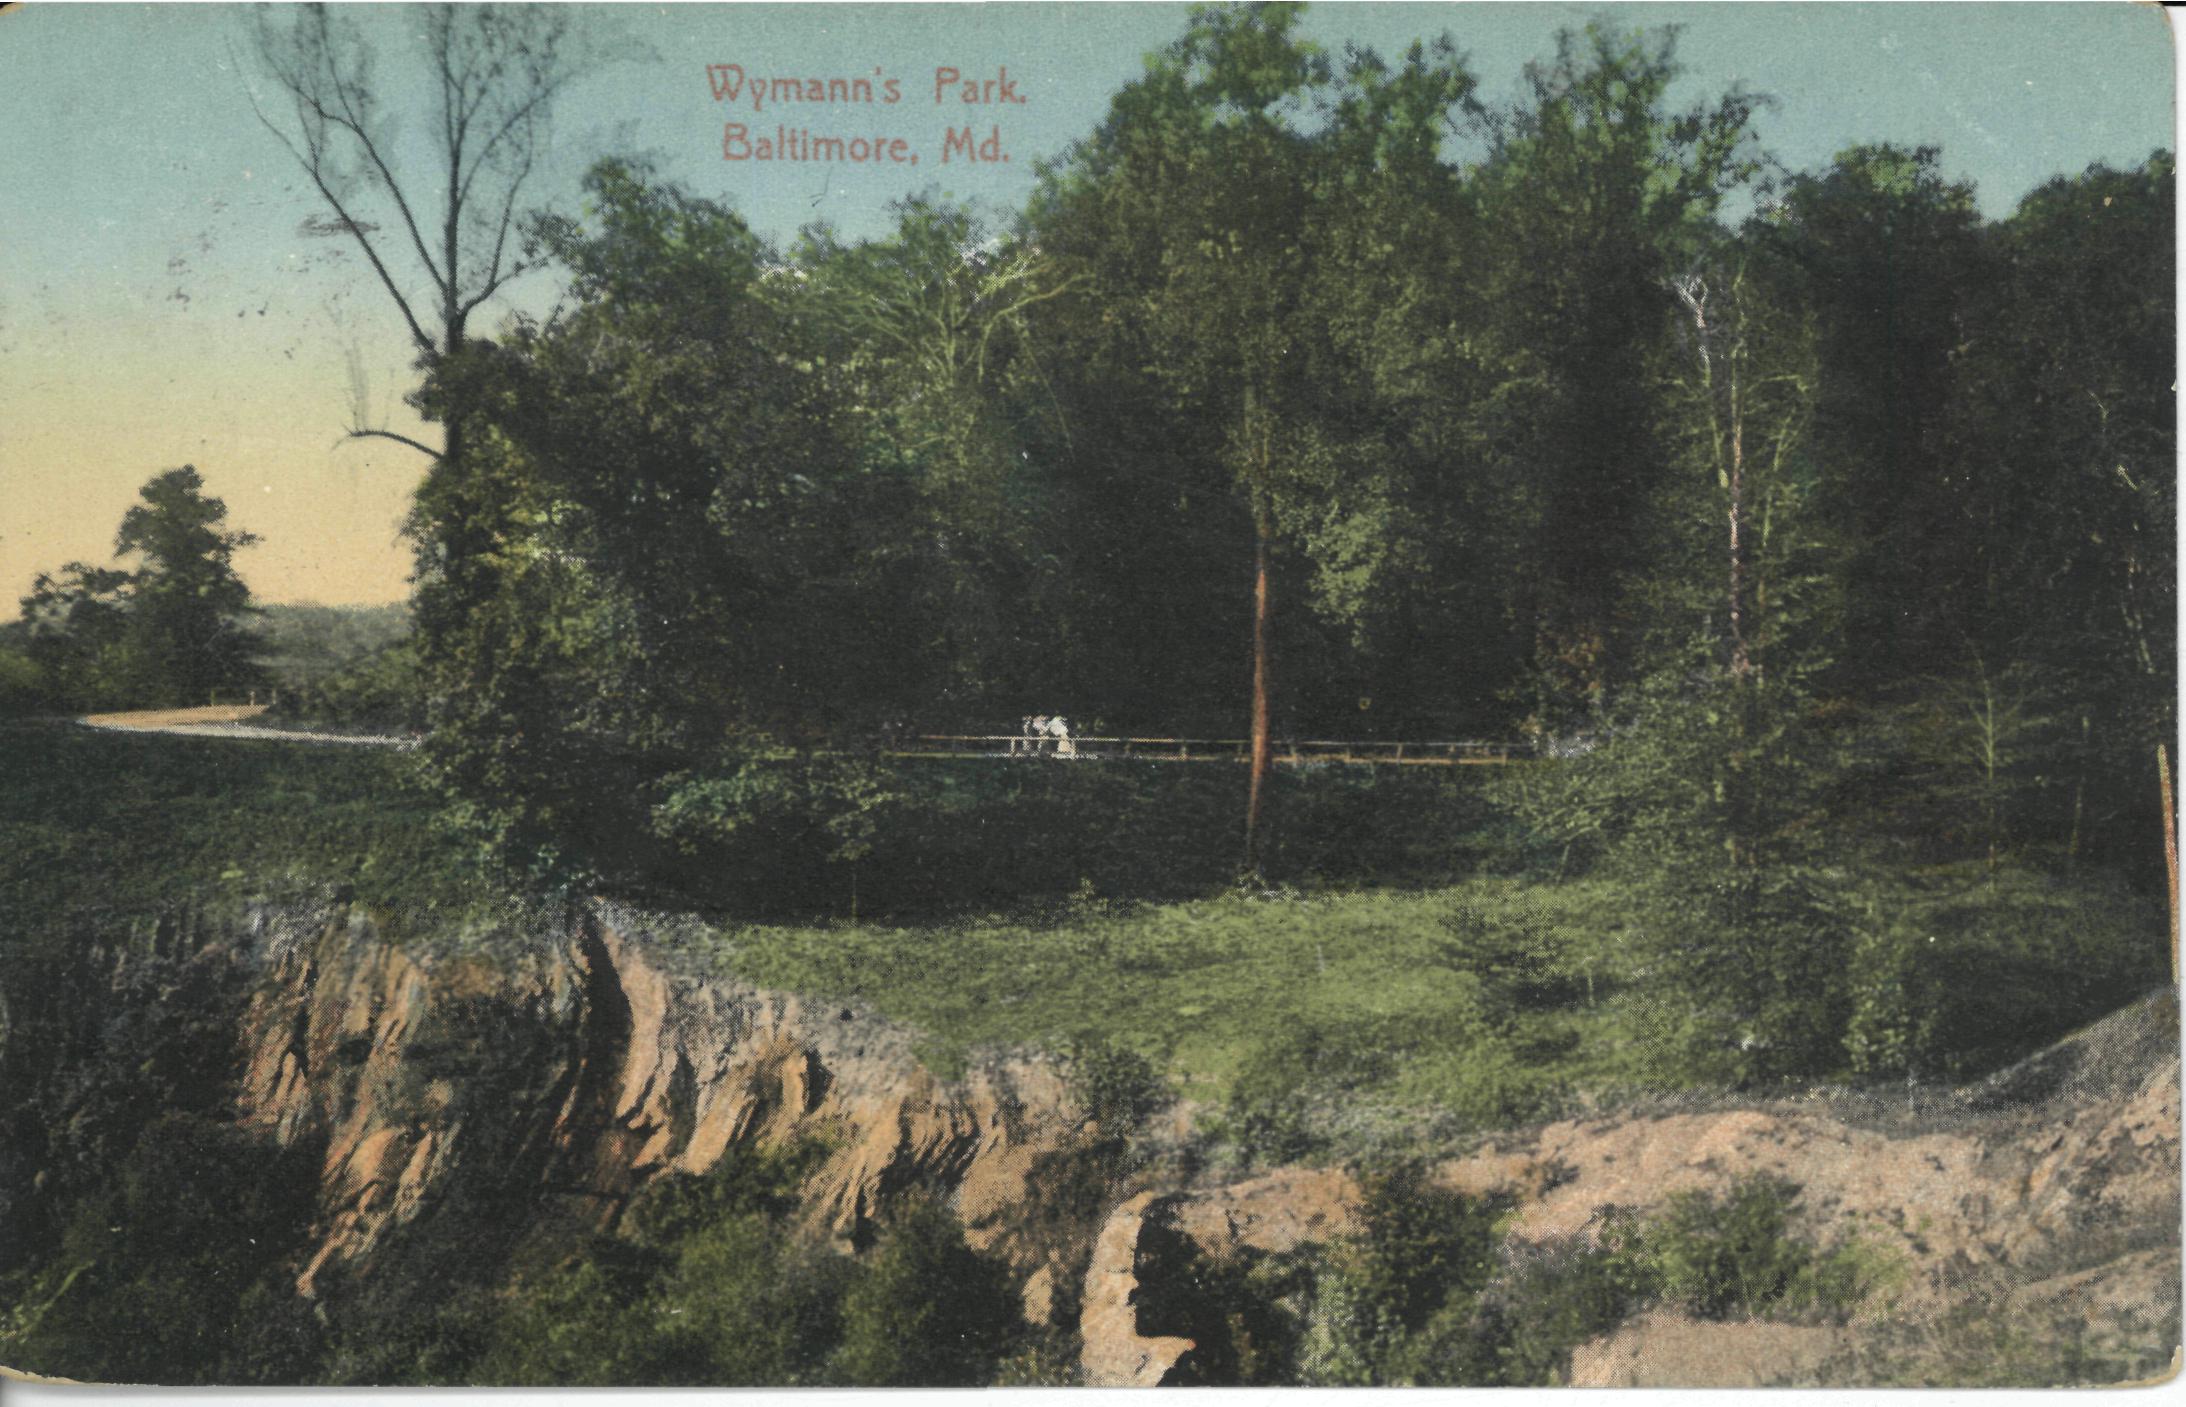 Postcard of Wymann's Park circa 1910